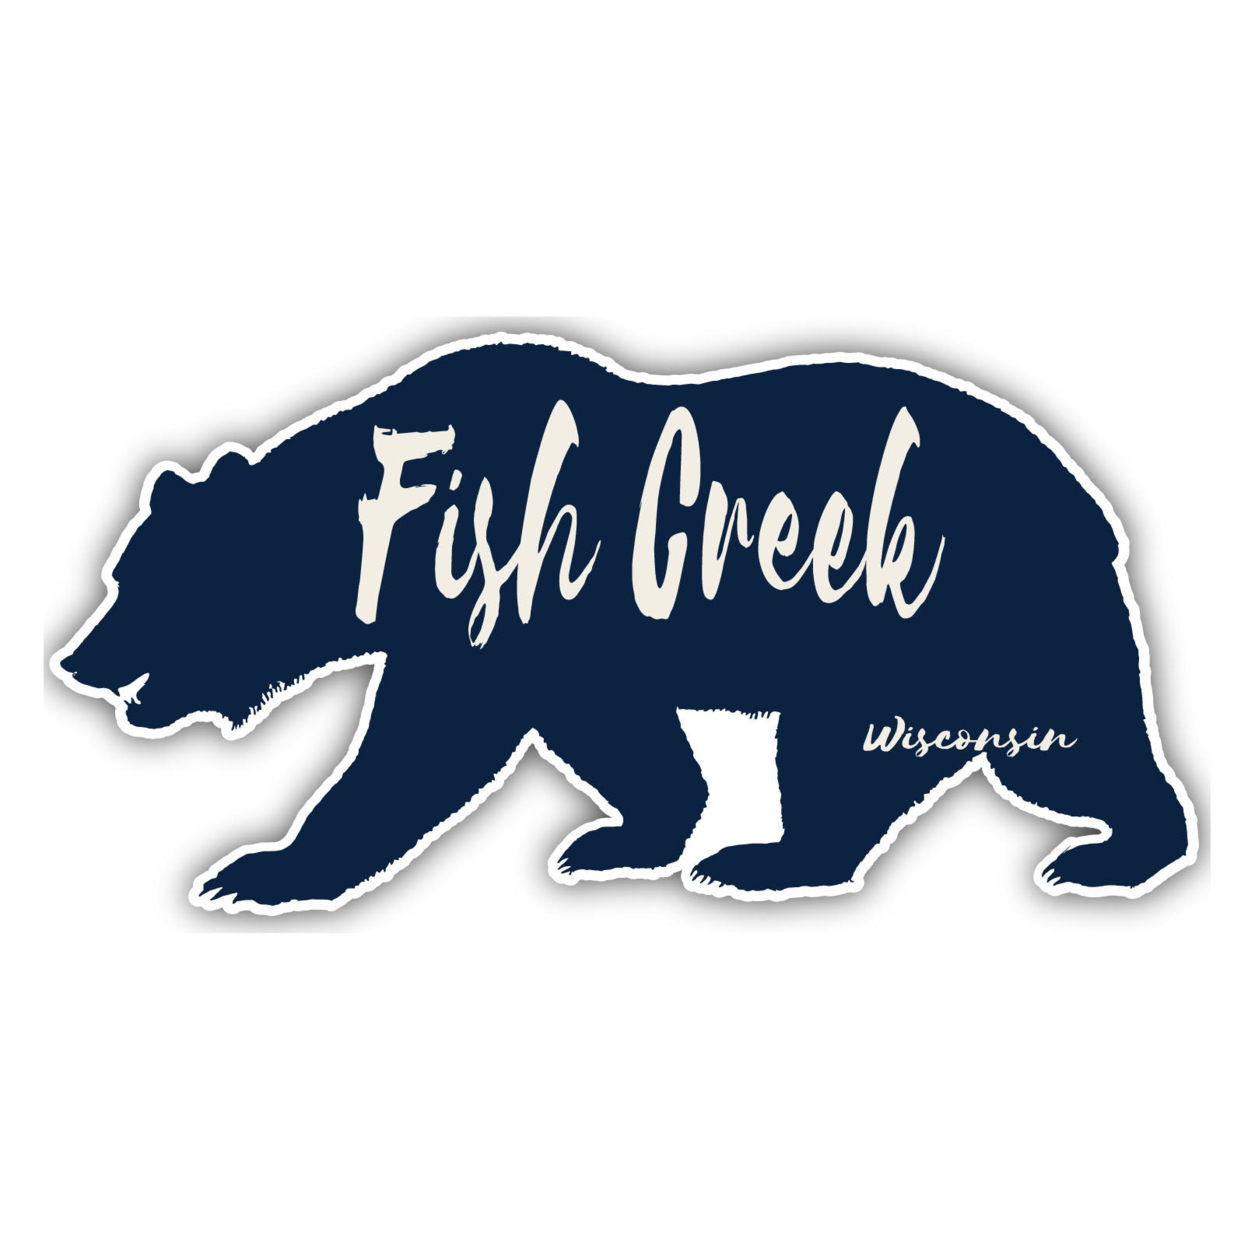 Fish Creek Wisconsin Souvenir Decorative Stickers (Choose Theme And Size) - Single Unit, 4-Inch, Bear